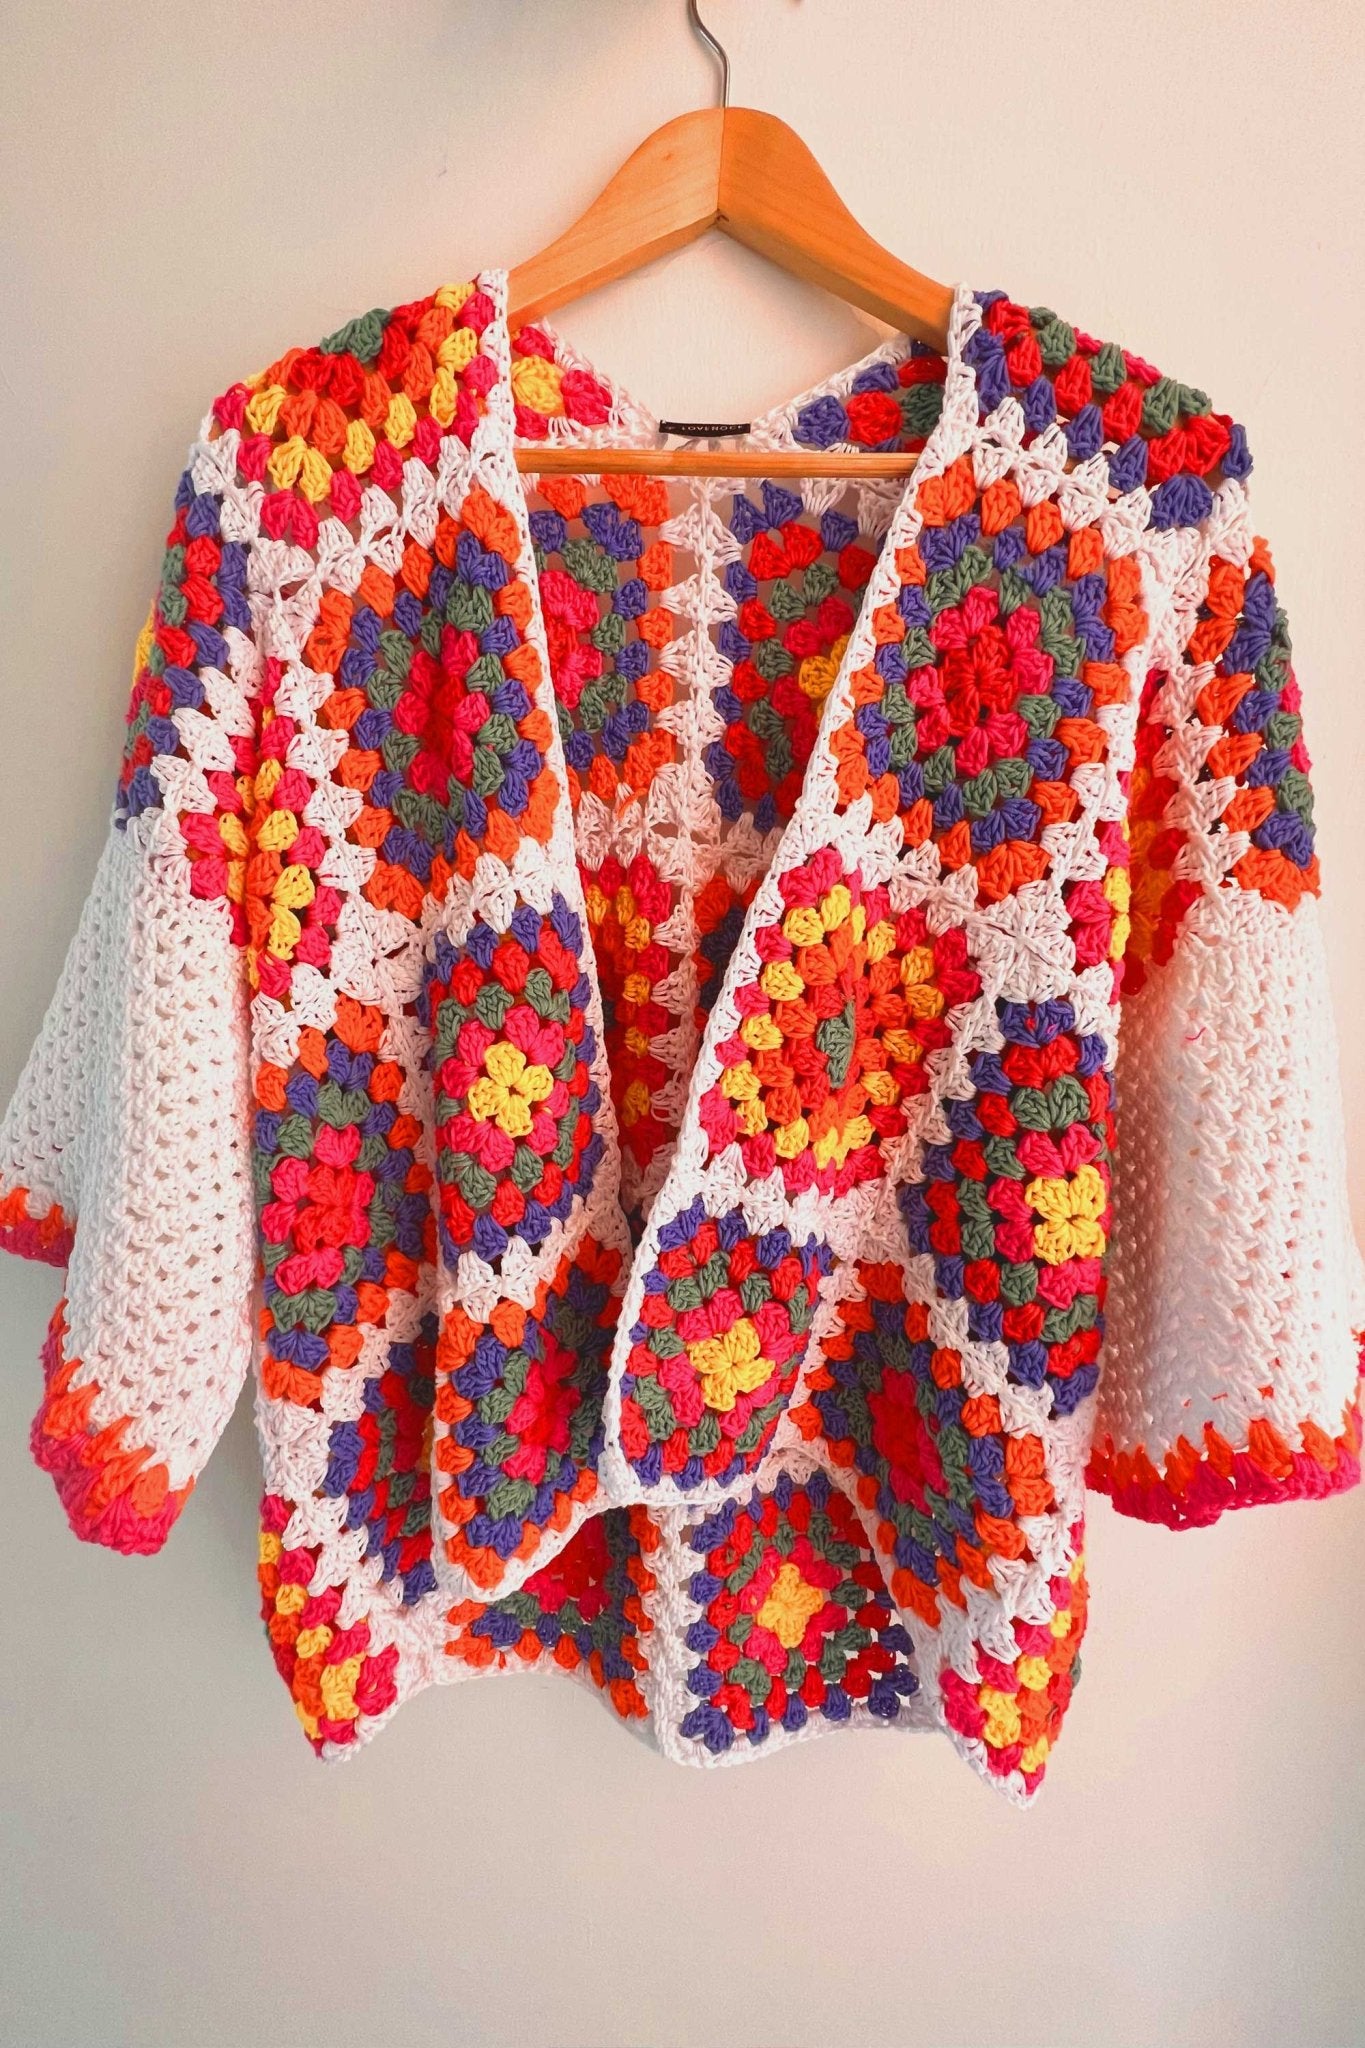 Saquito crochet Rainbow - Edición NÖCK - LOVENOCK